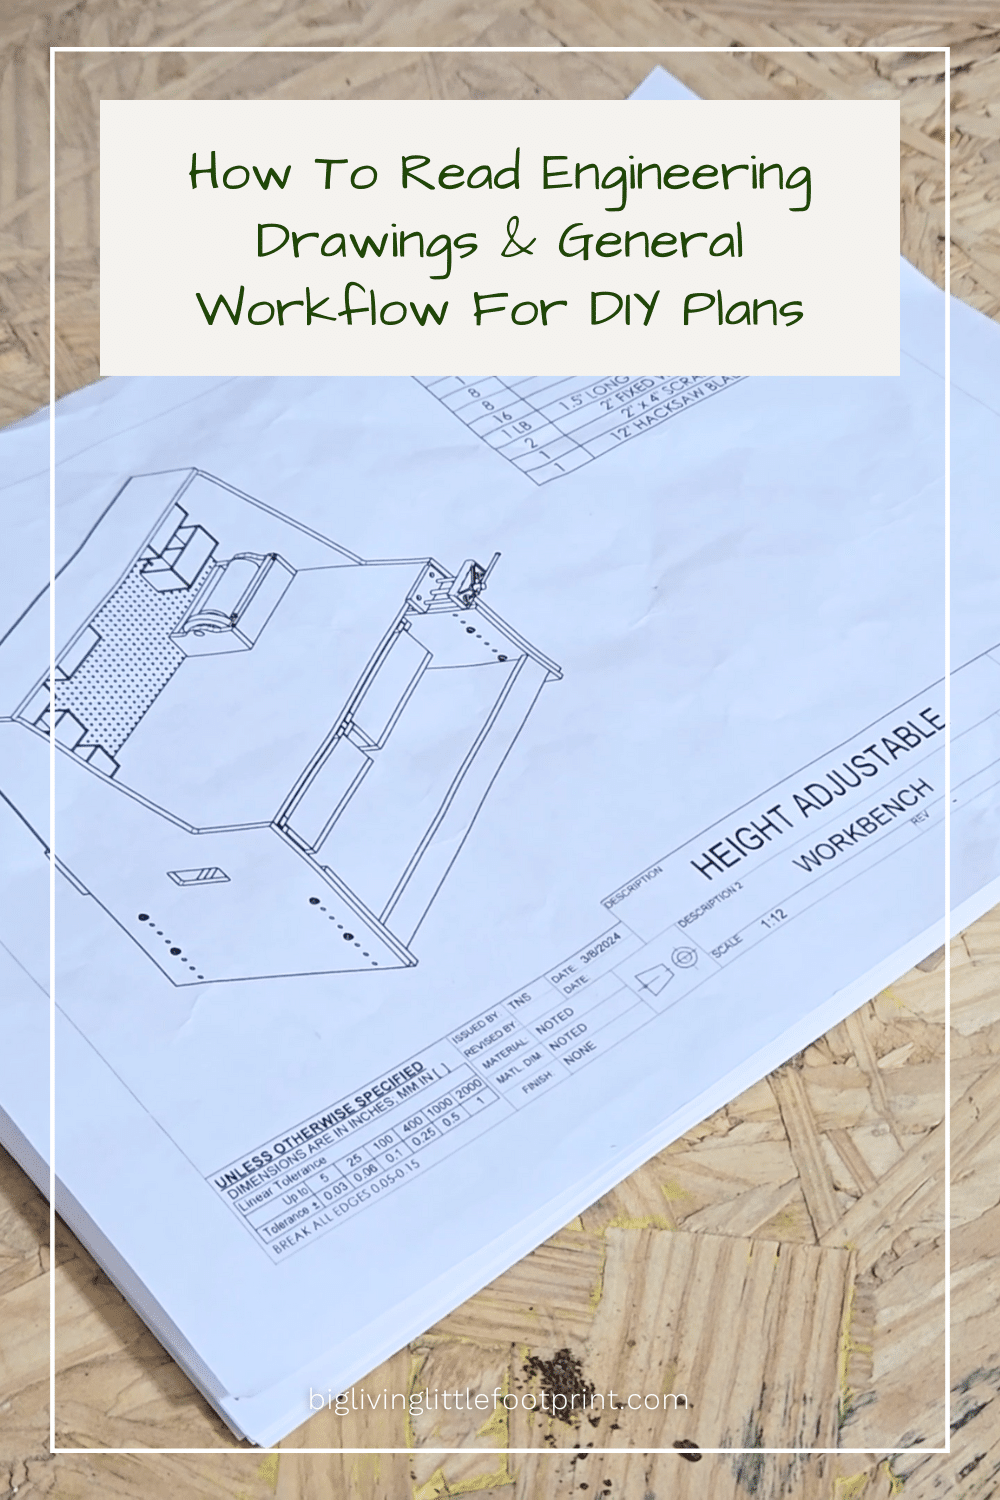 How To Read Engineering Drawings & General Workflow For DIY Plans